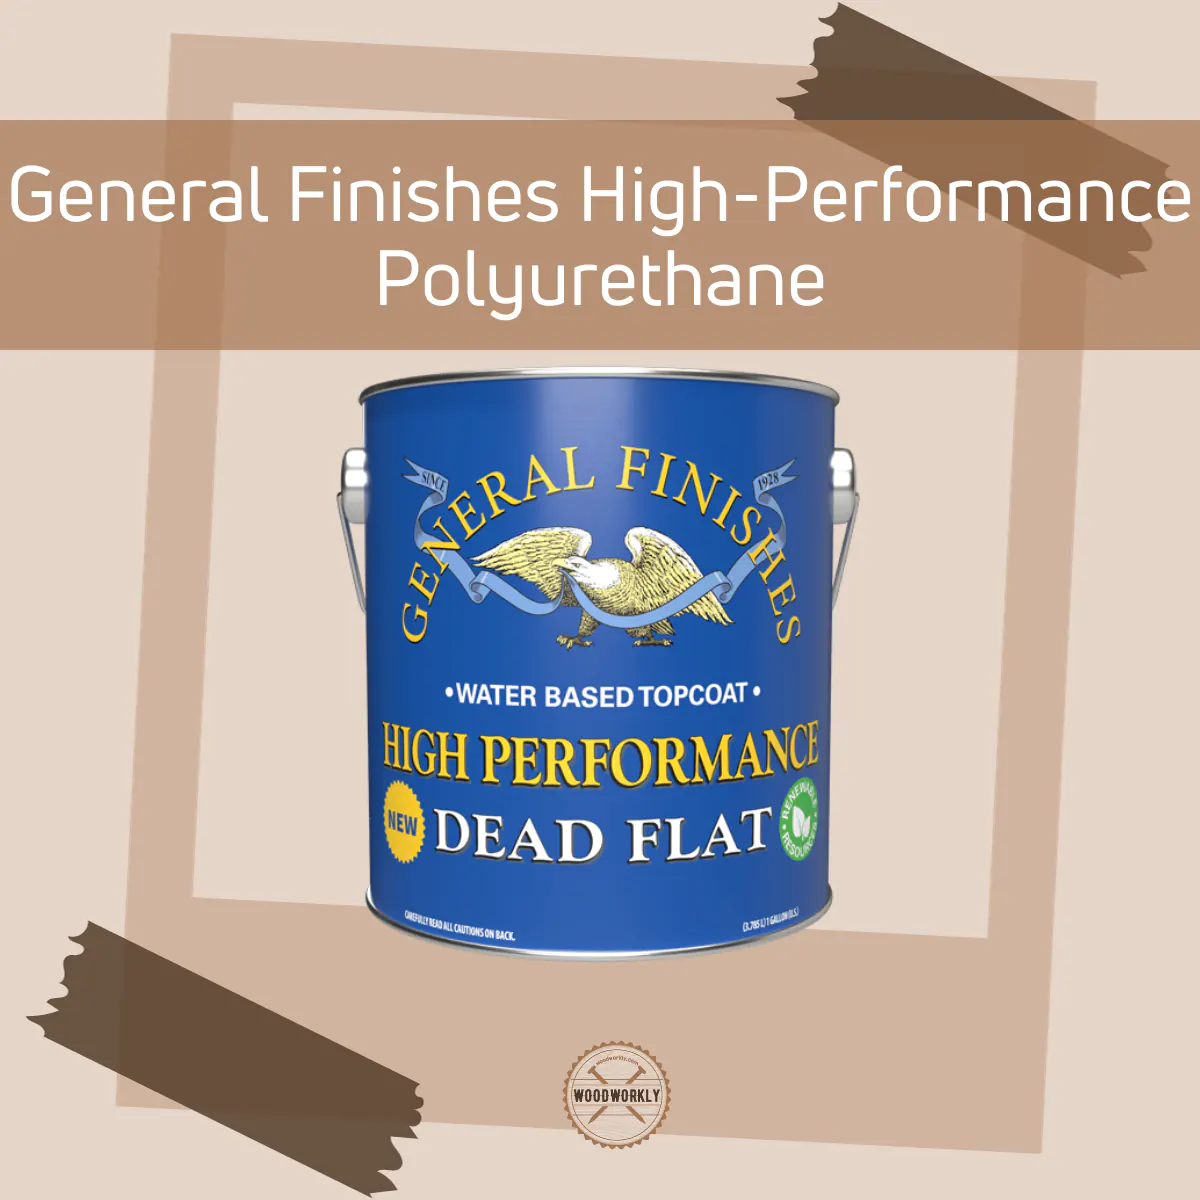 General Finishes High-Performance Polyurethane